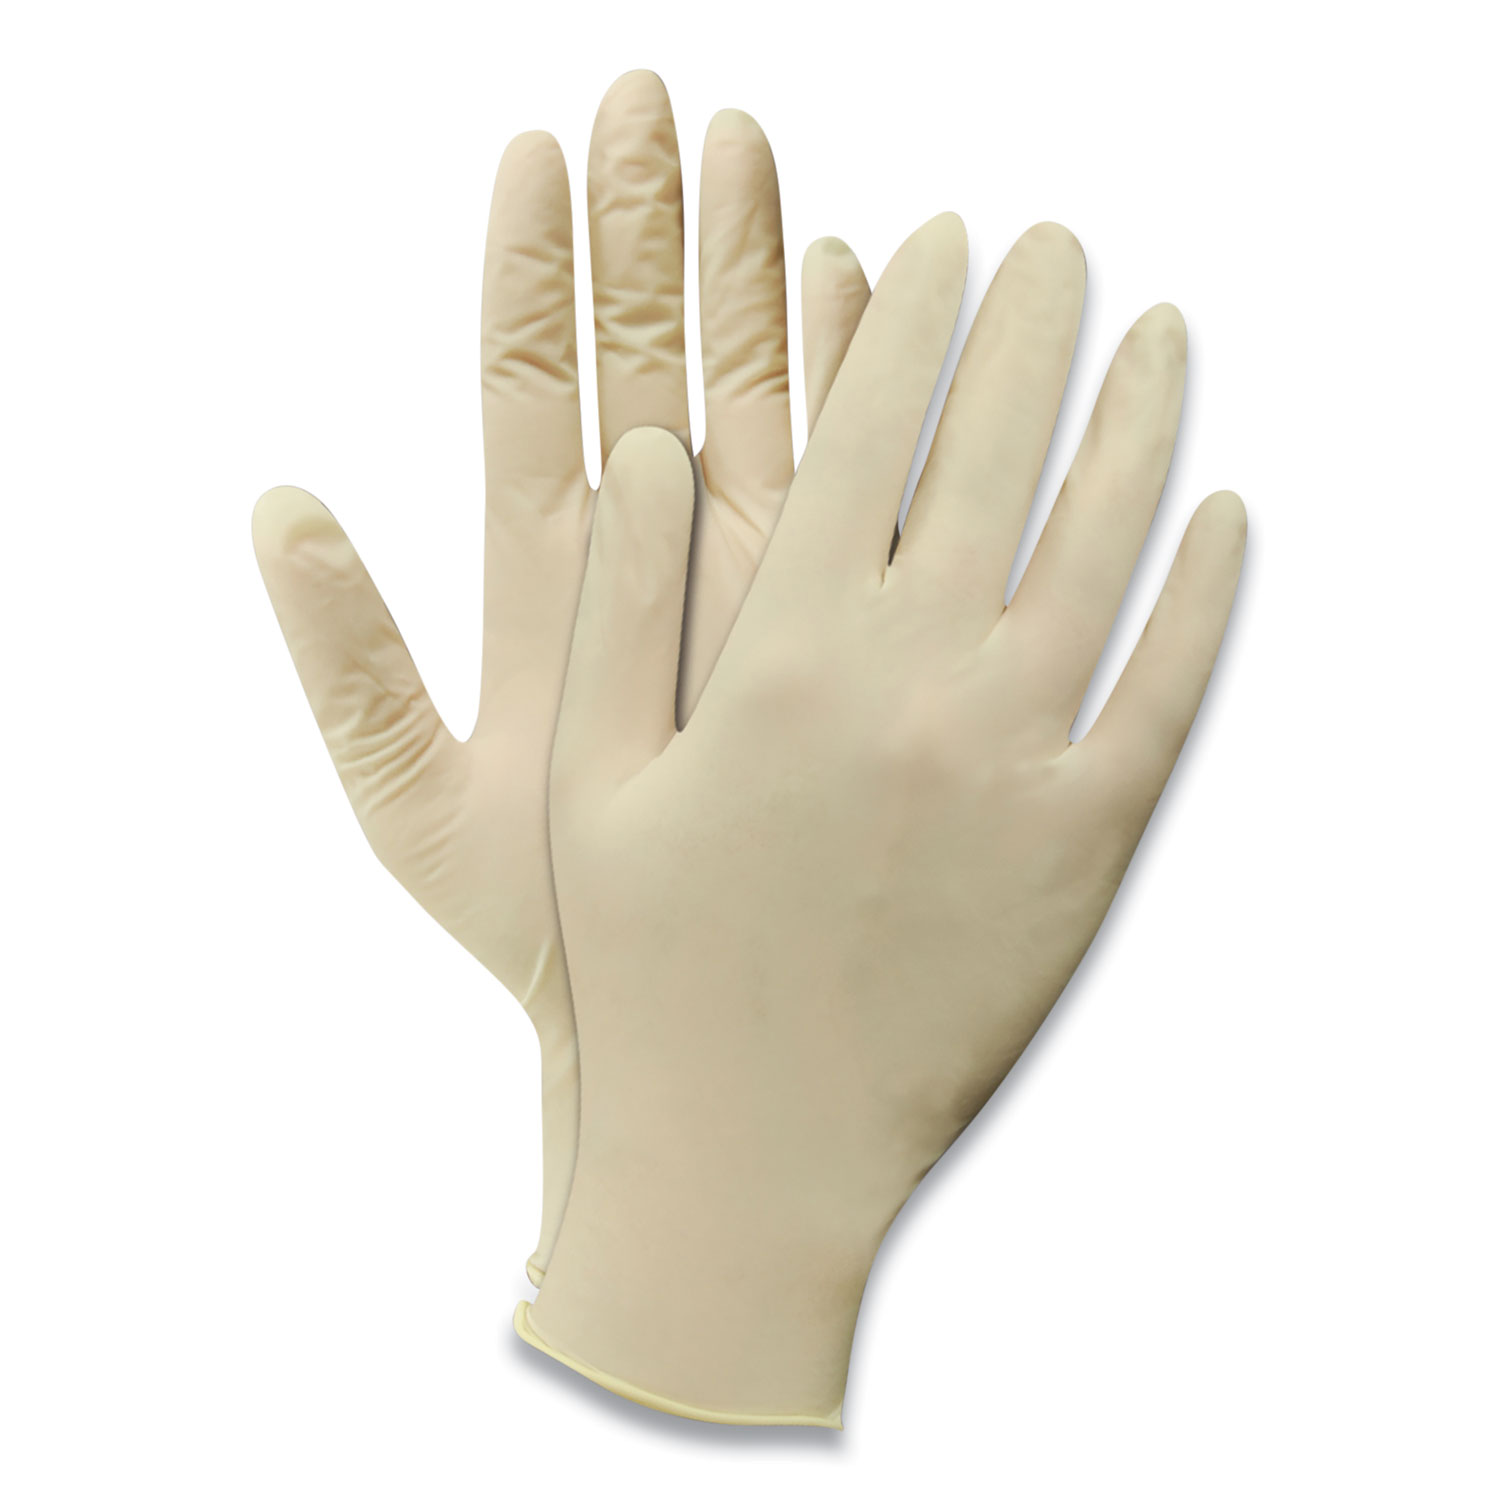  GN1 AG44100TXL Powdered Disposable Latex Gloves, Natural White, X-Large, 100/Box (GN1AG44100TXL) 